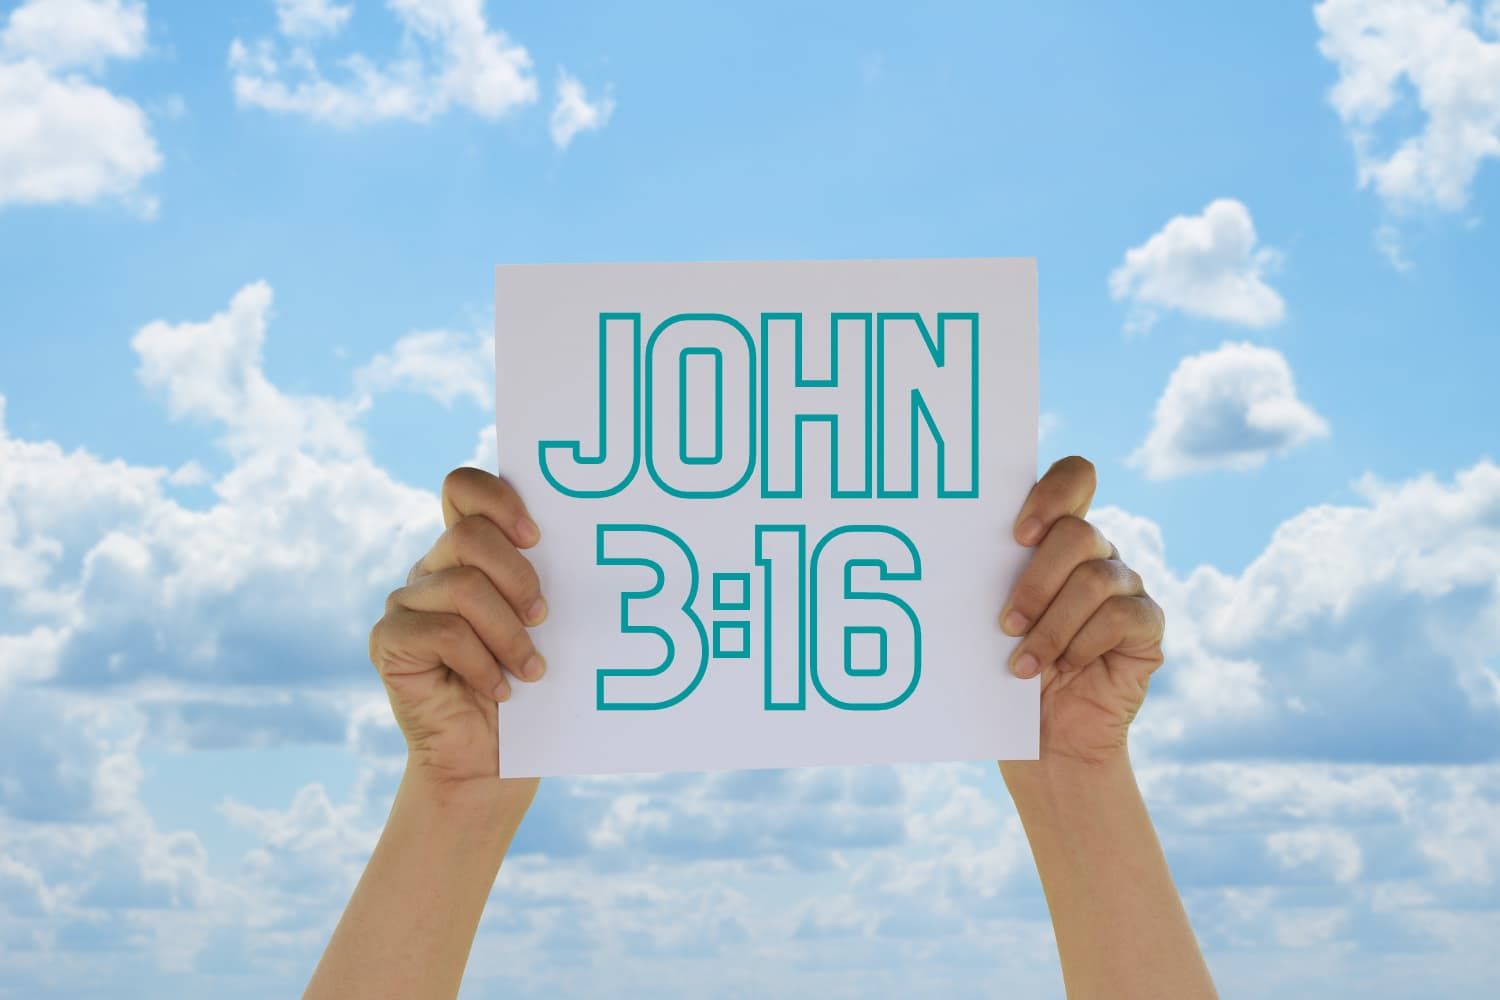 john%203%2016-630e5fad Jesus - His encounters